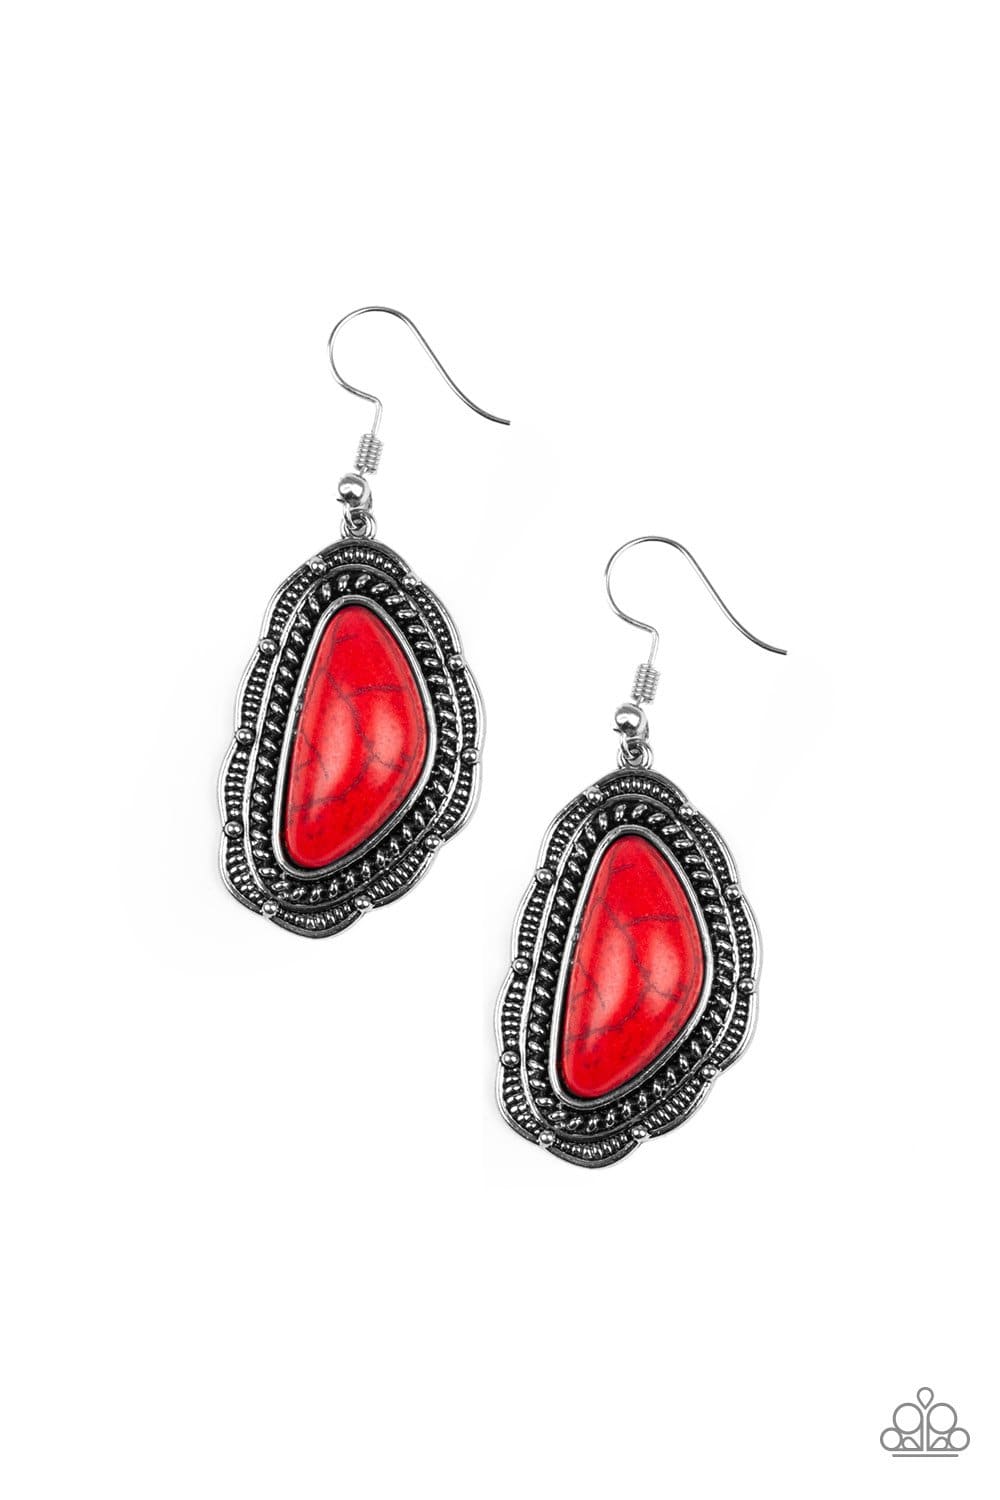 Santa Fe Soul - Red Earrings